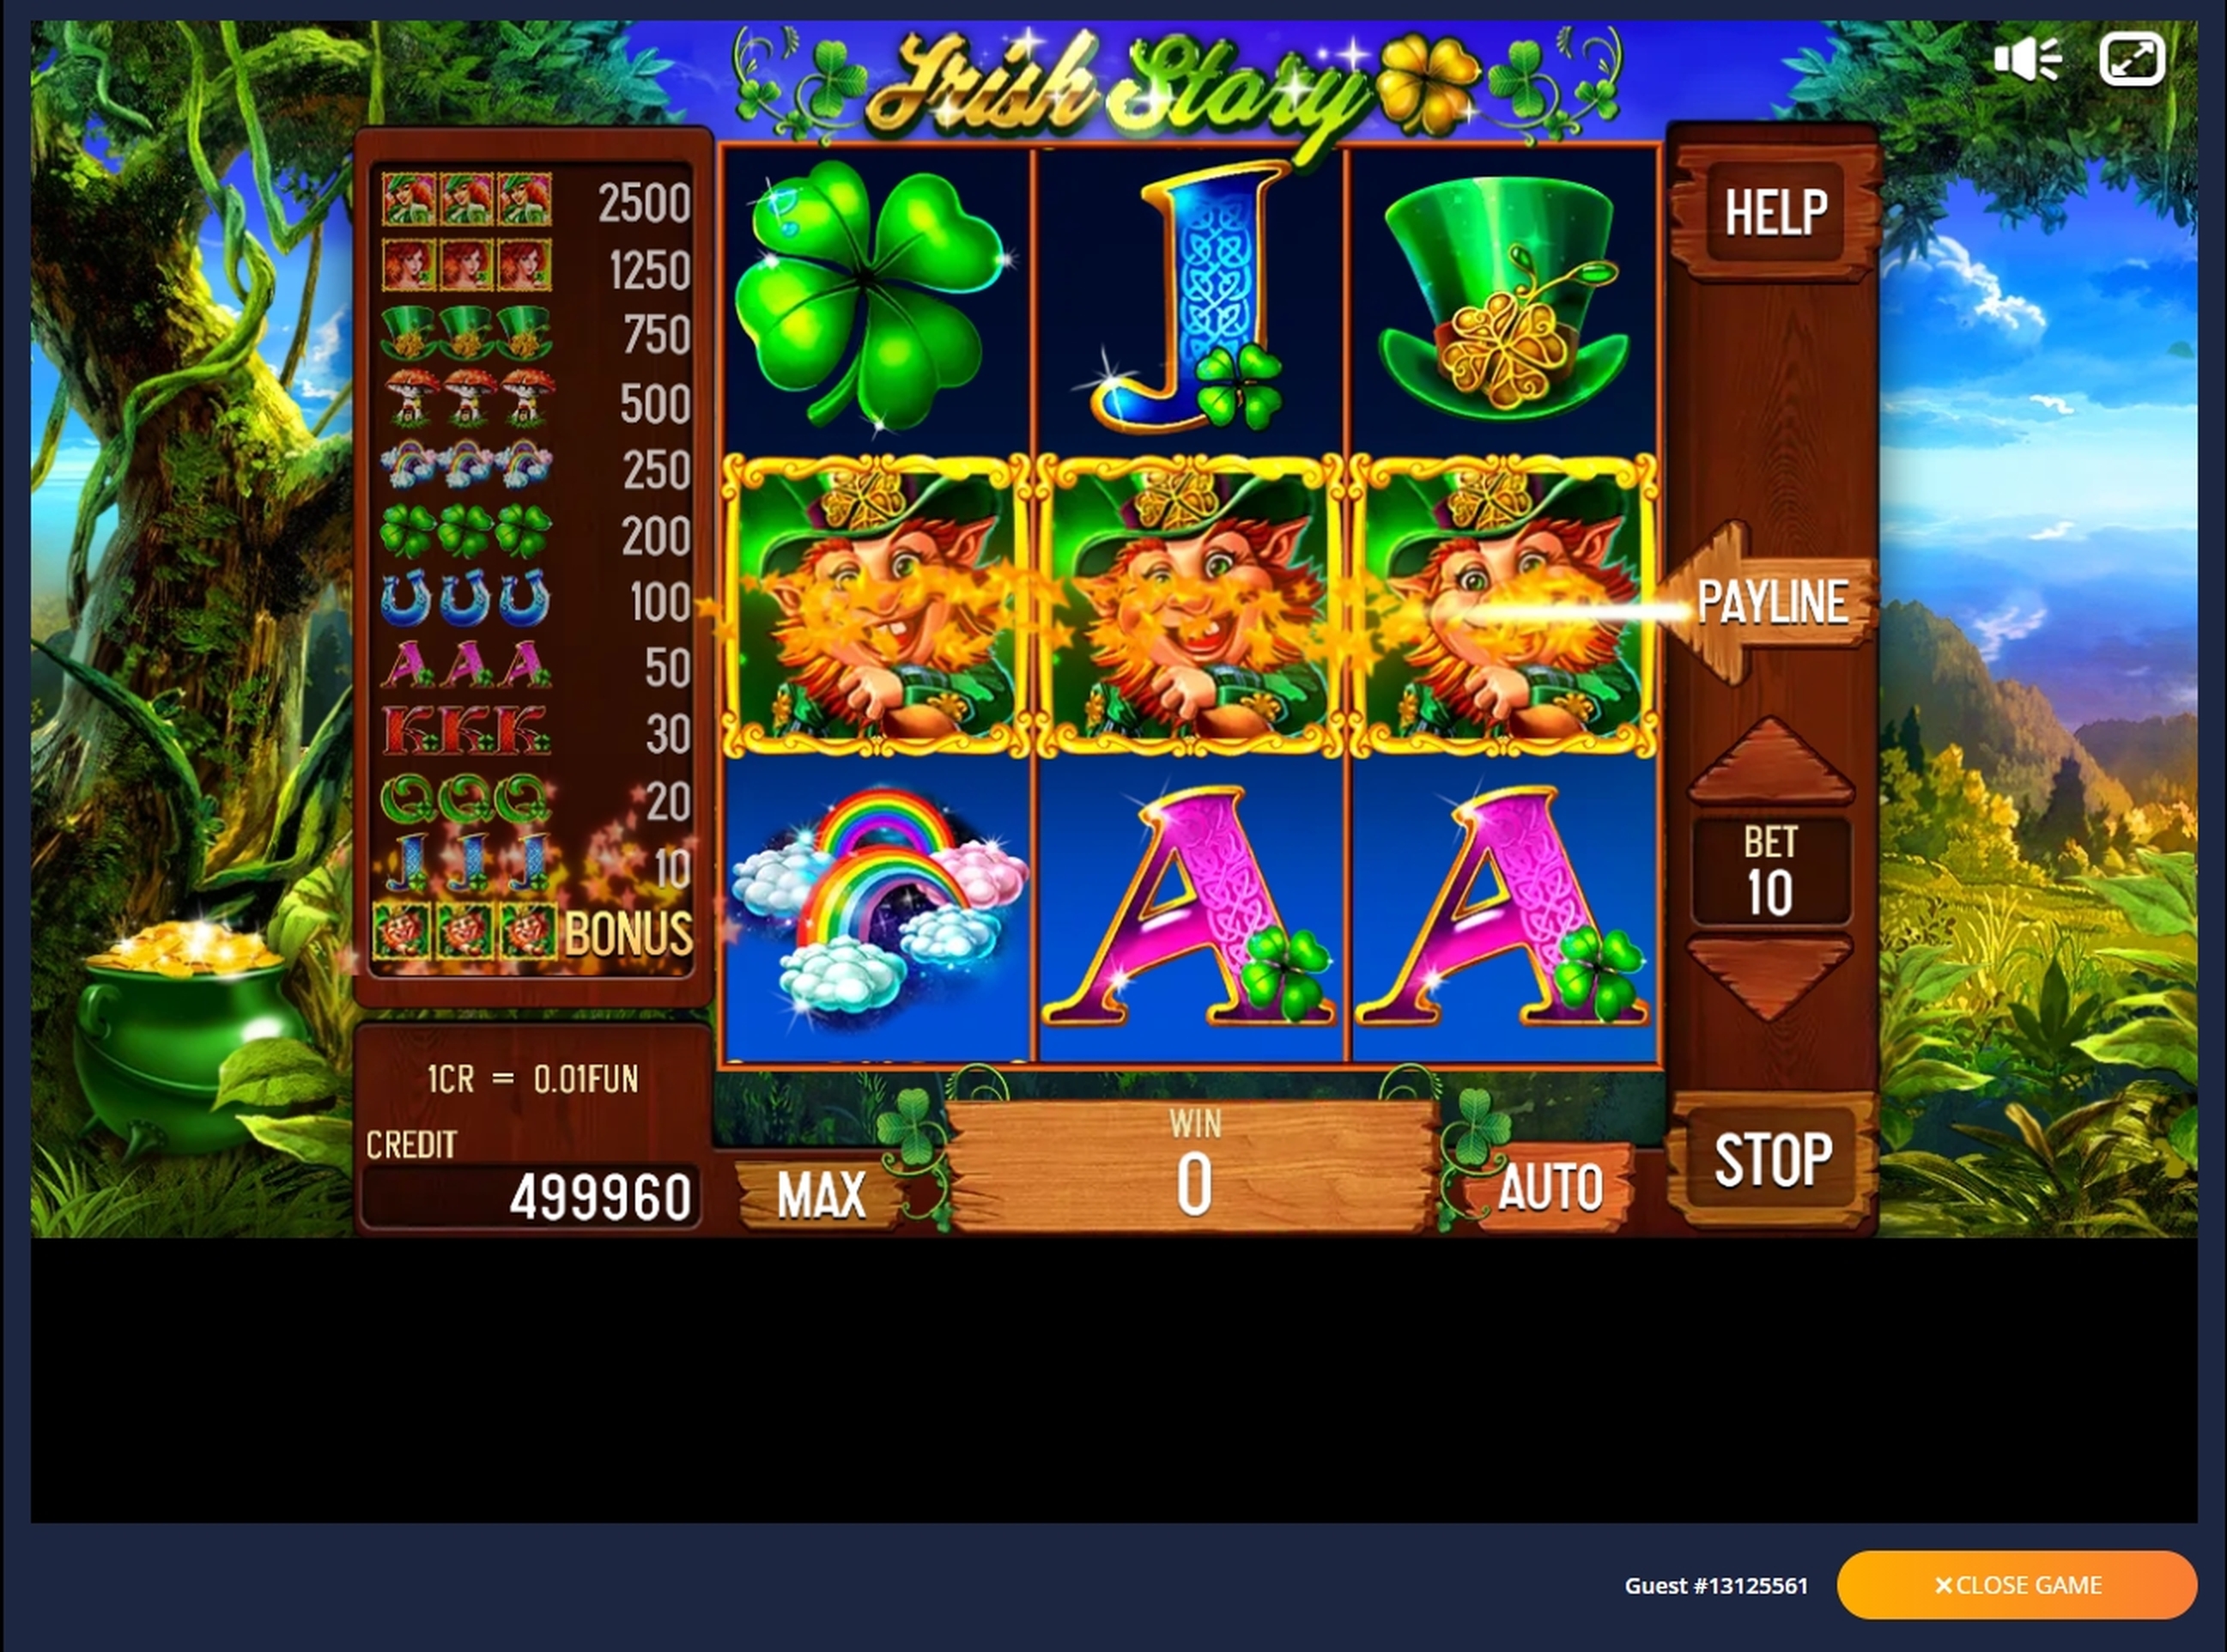 Win Money in Irish Story Free Slot Game by Inbet Games